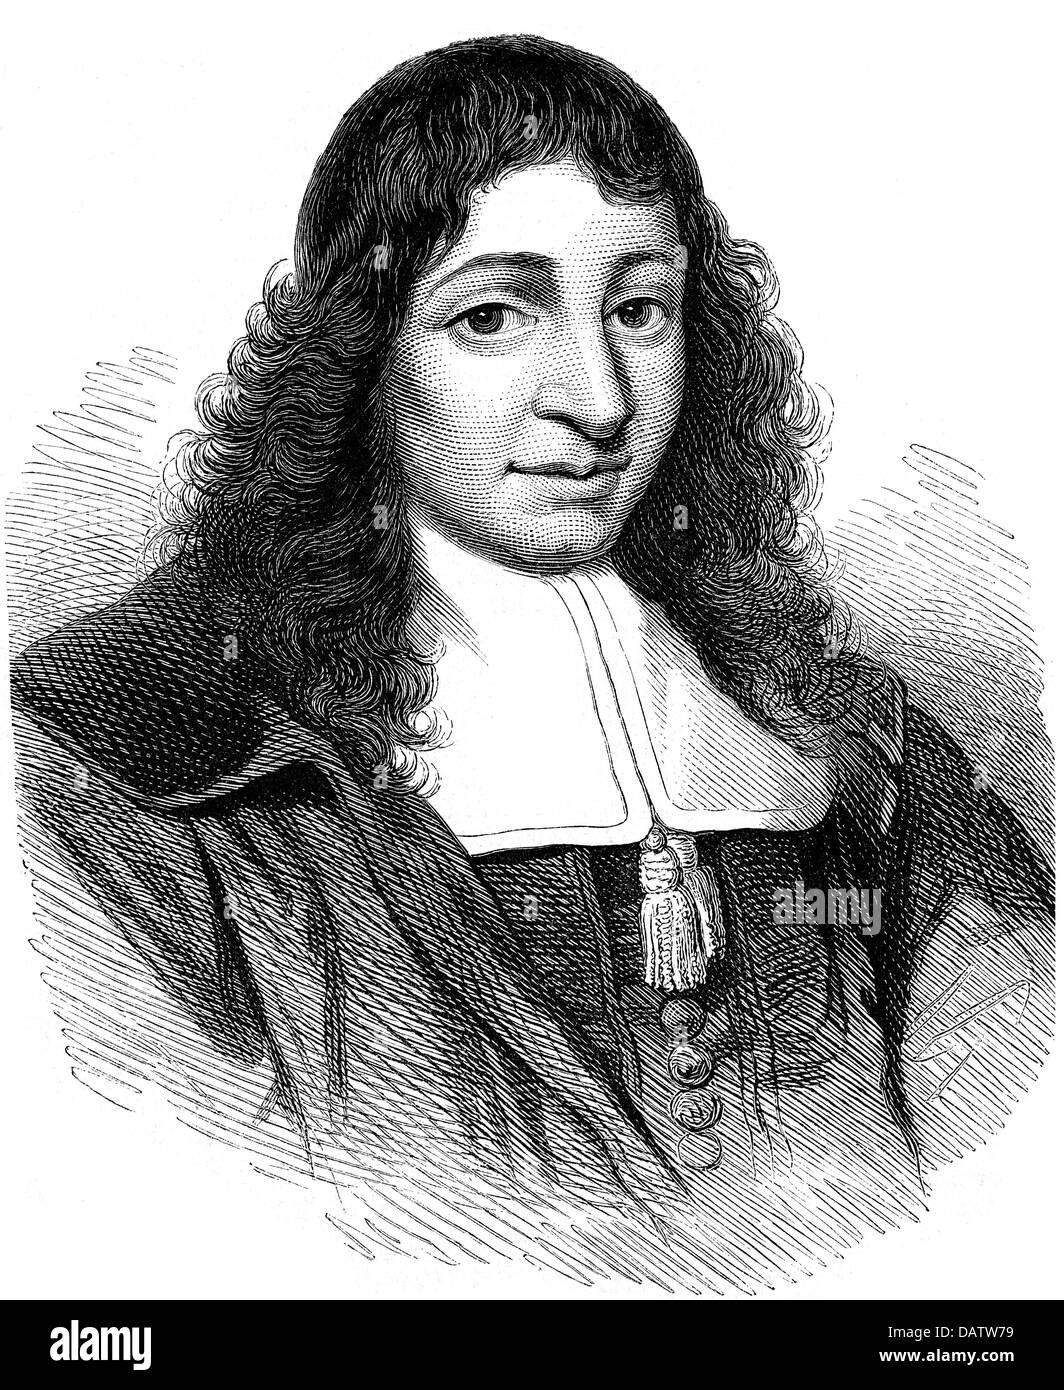 Spinoza, Benedictus (Baruch) de, 24.11.1632 - 21.2.1677, Dutch philosopher, portrait, wood engraving, 19th century, Stock Photo